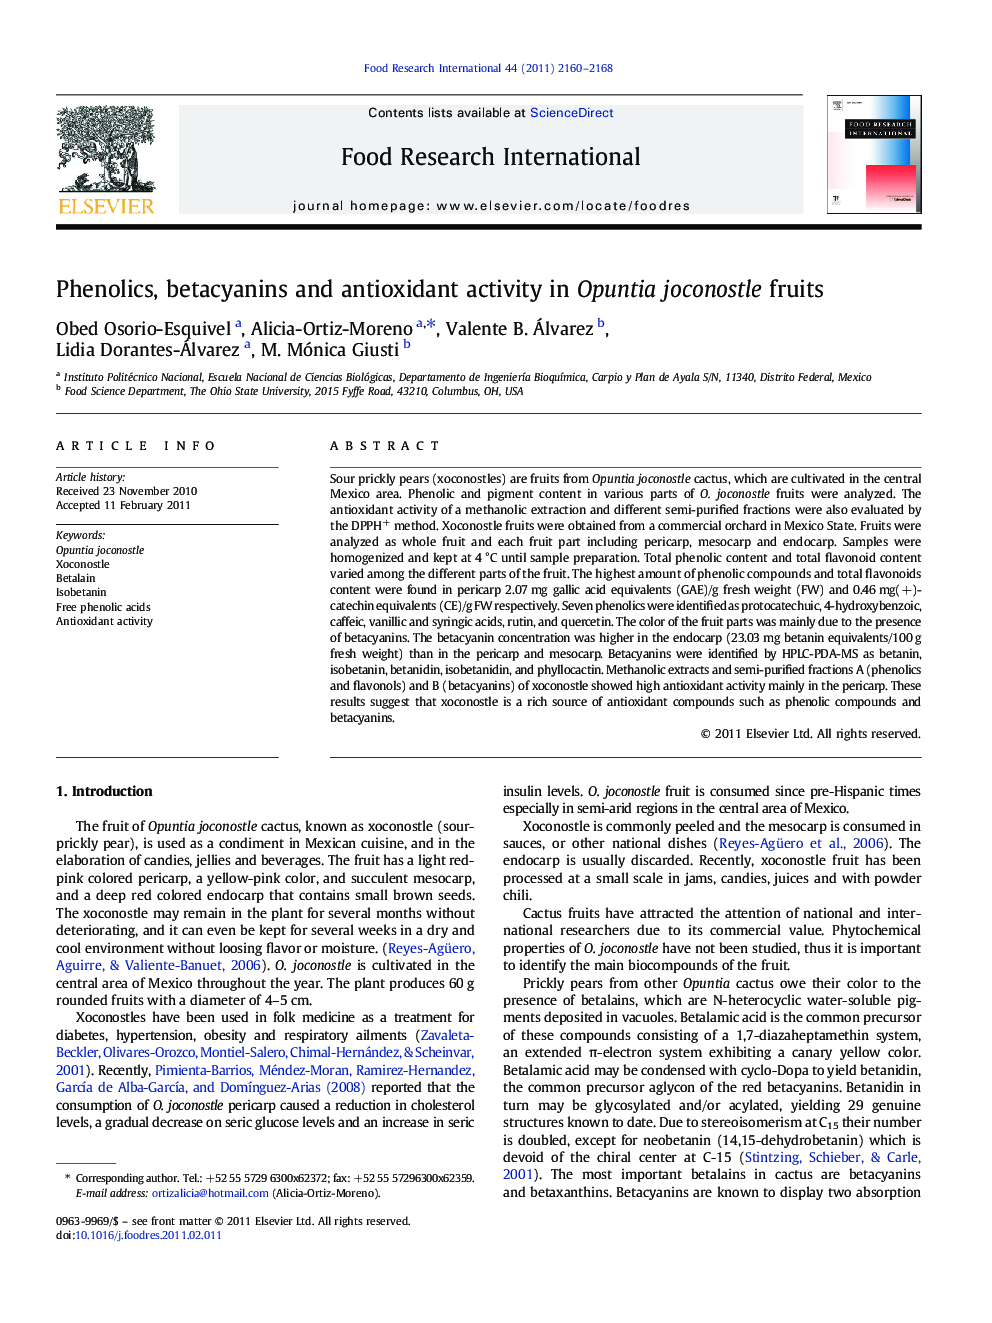 Phenolics, betacyanins and antioxidant activity in Opuntia joconostle fruits